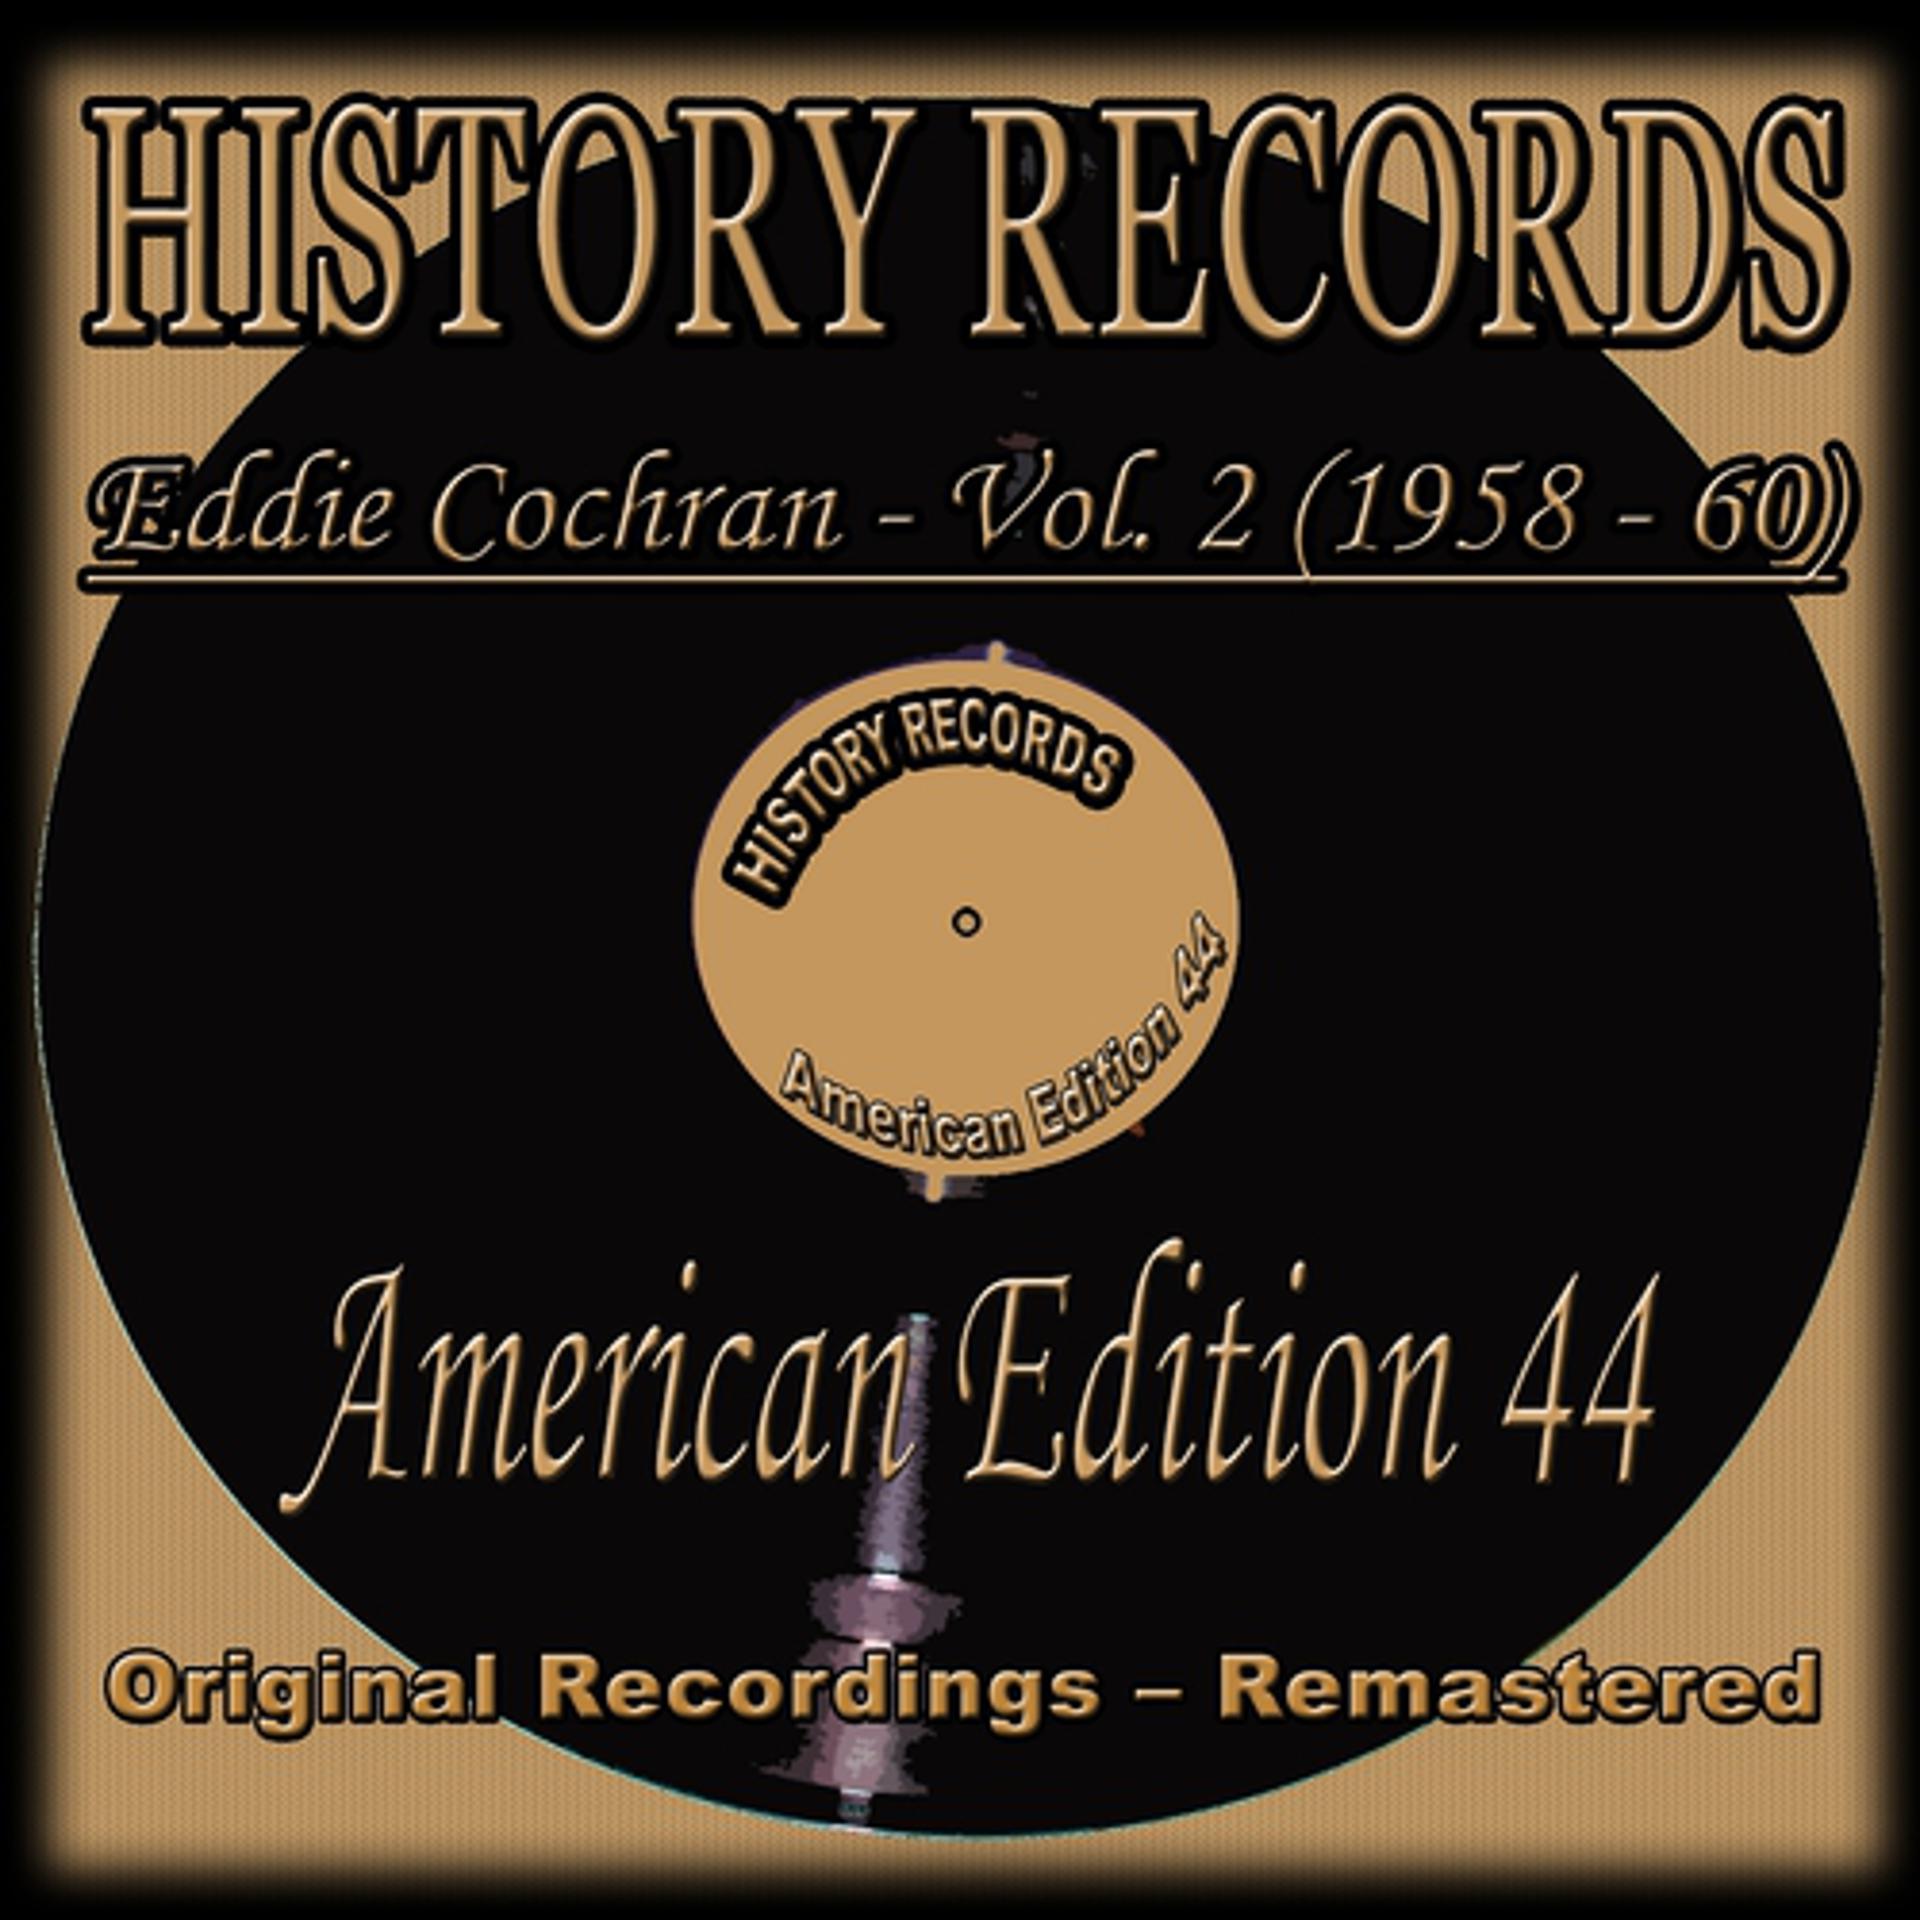 Постер альбома Eddie Cochran, Vol. 2 (1958 - 60) (History Records - American Edition 44 - Original Recordings - Remastered)